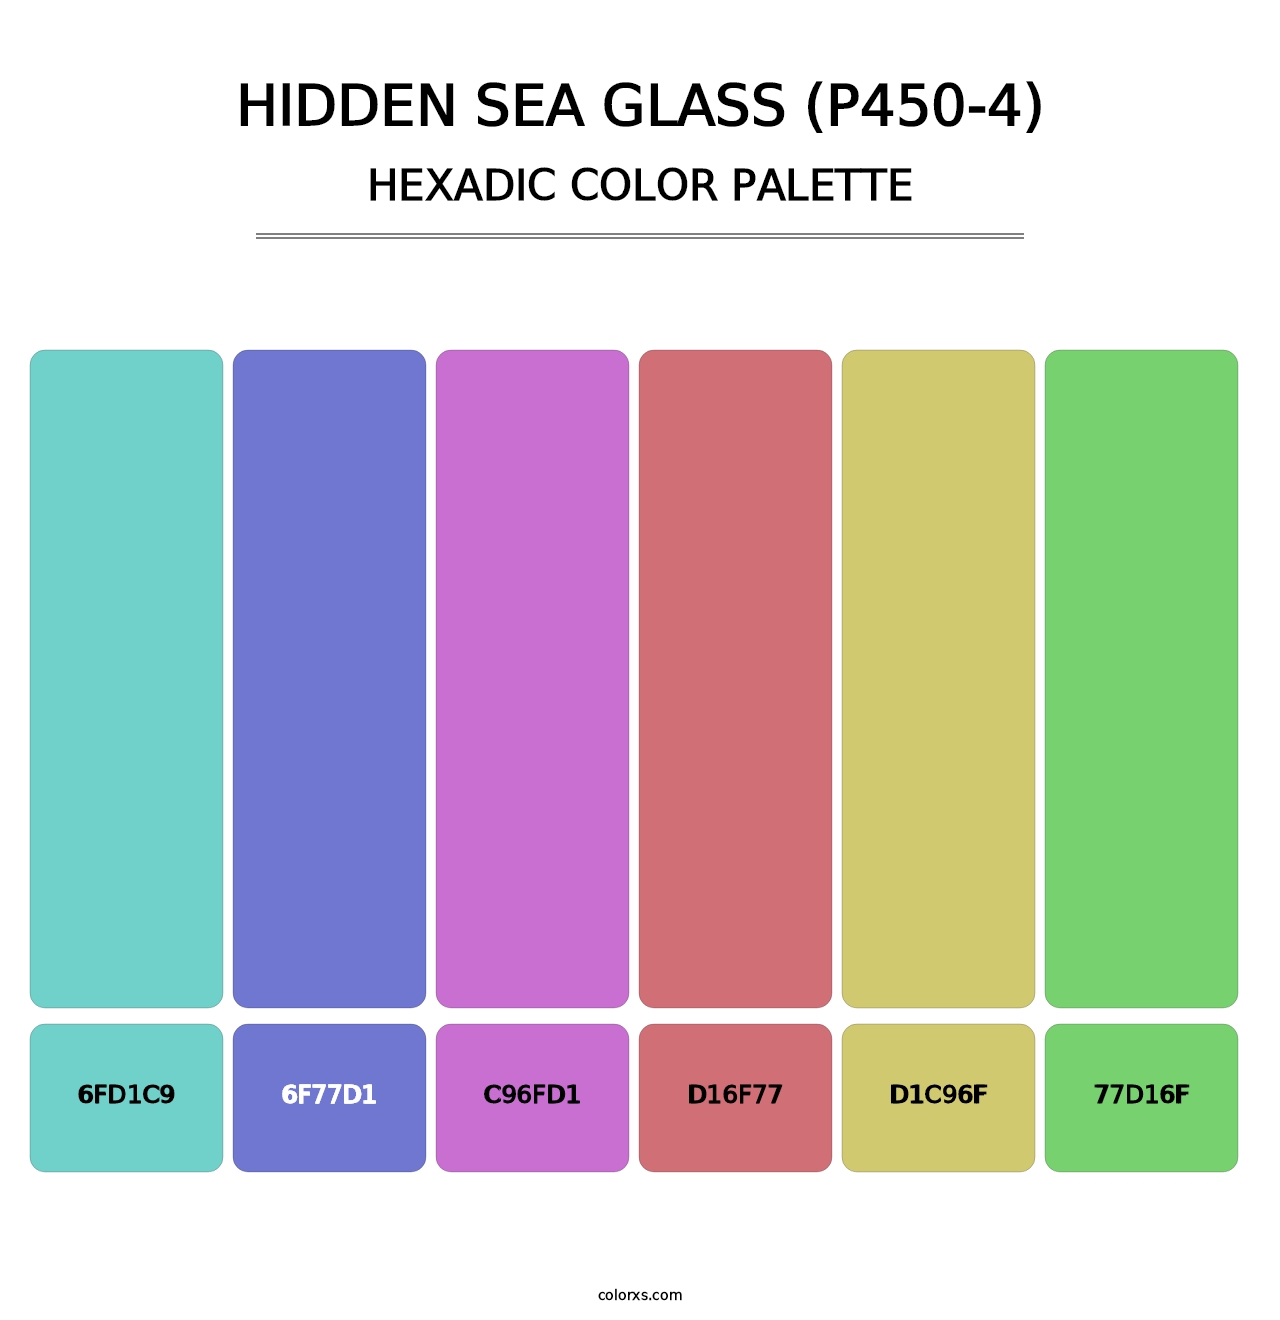 Hidden Sea Glass (P450-4) - Hexadic Color Palette